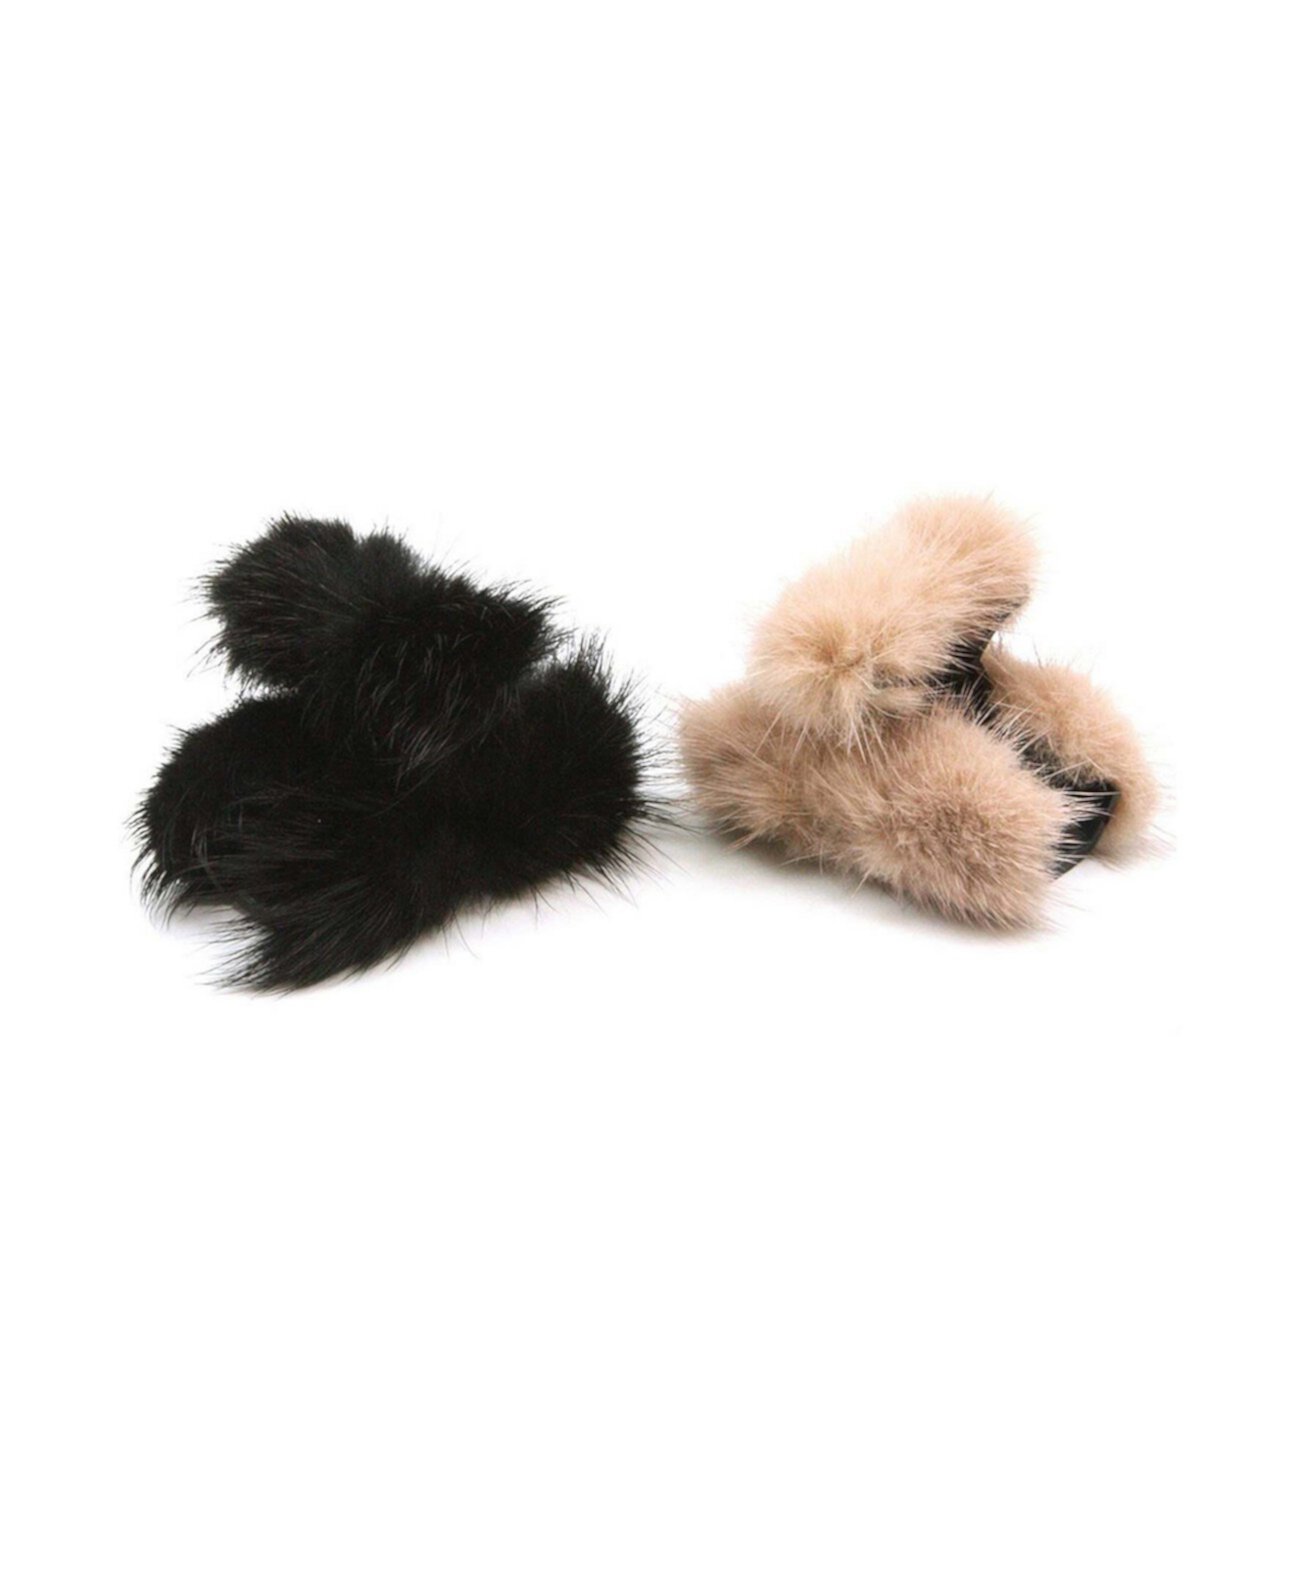 Челюсти для волос Fuzzy Pom Pom, набор из 2 шт. Soho Style